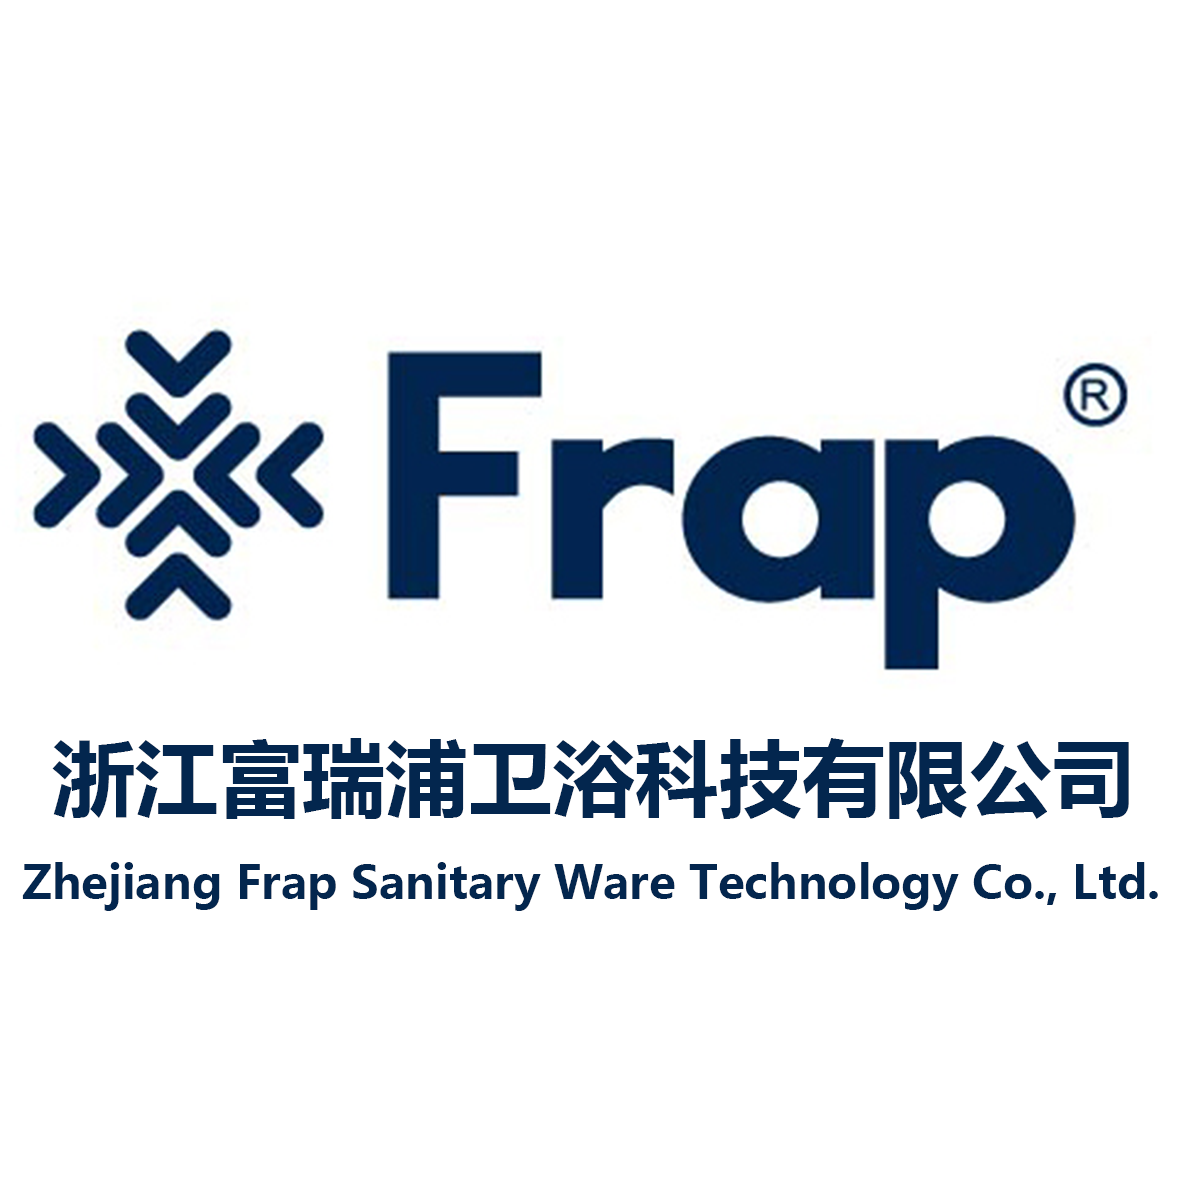 Zhejiang Frap Sanitary Ware Technology Co., Ltd.